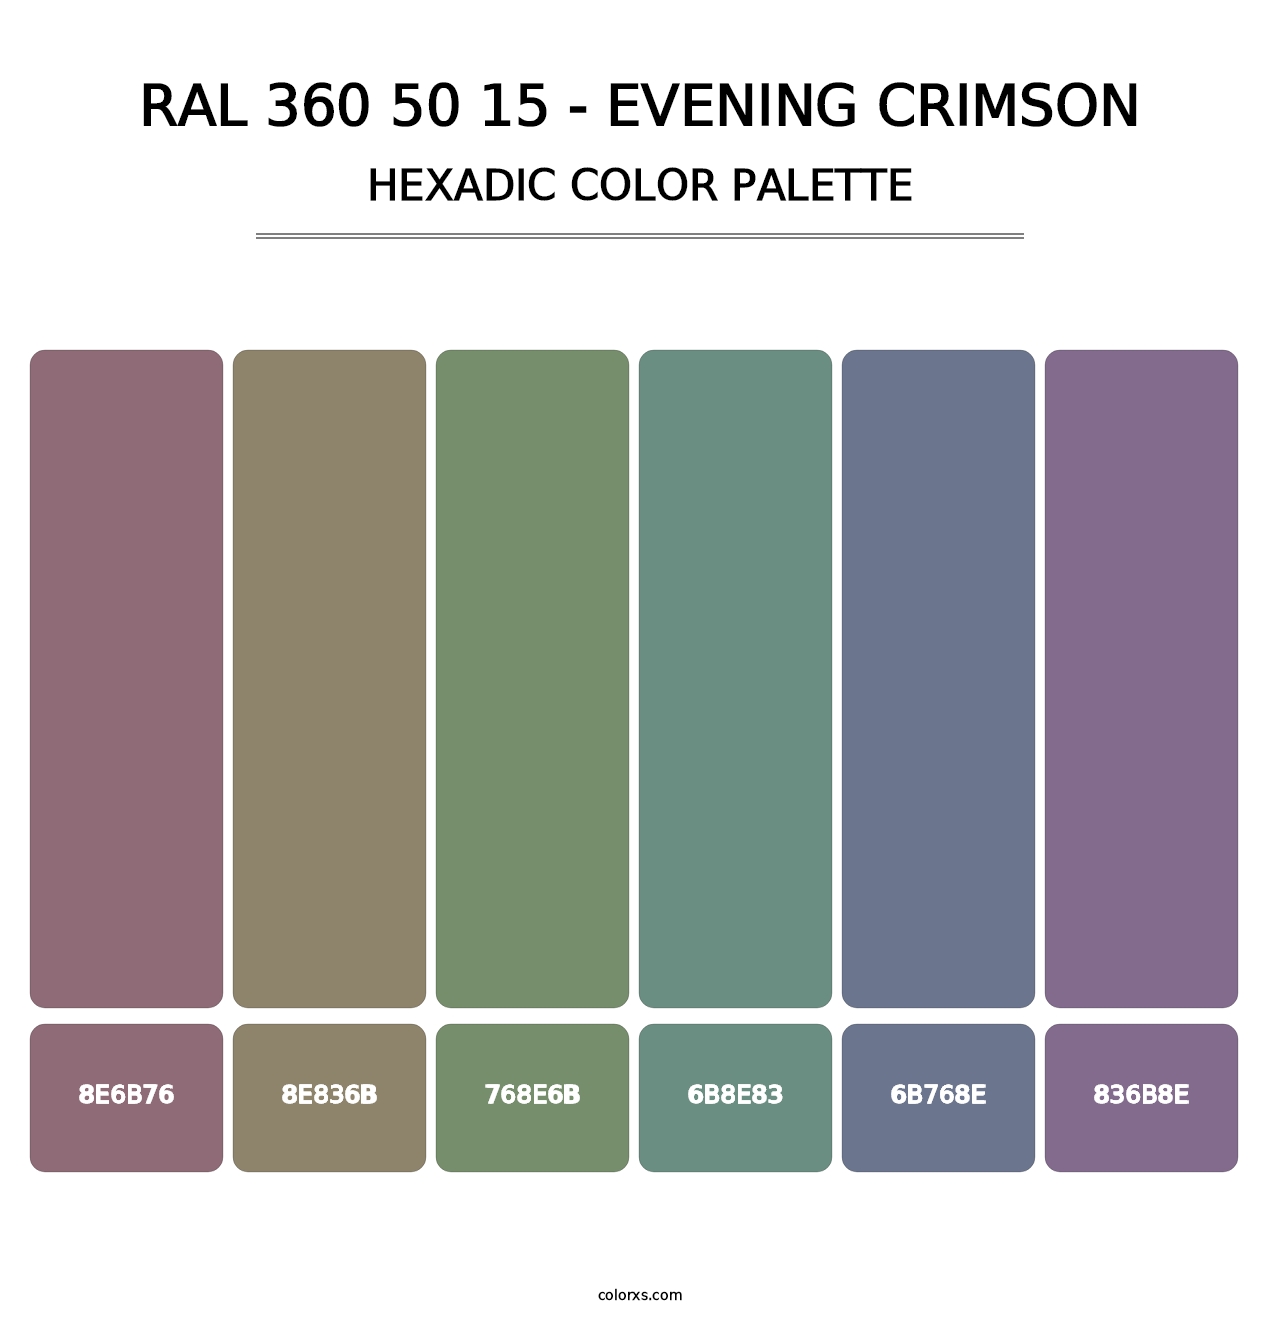 RAL 360 50 15 - Evening Crimson - Hexadic Color Palette